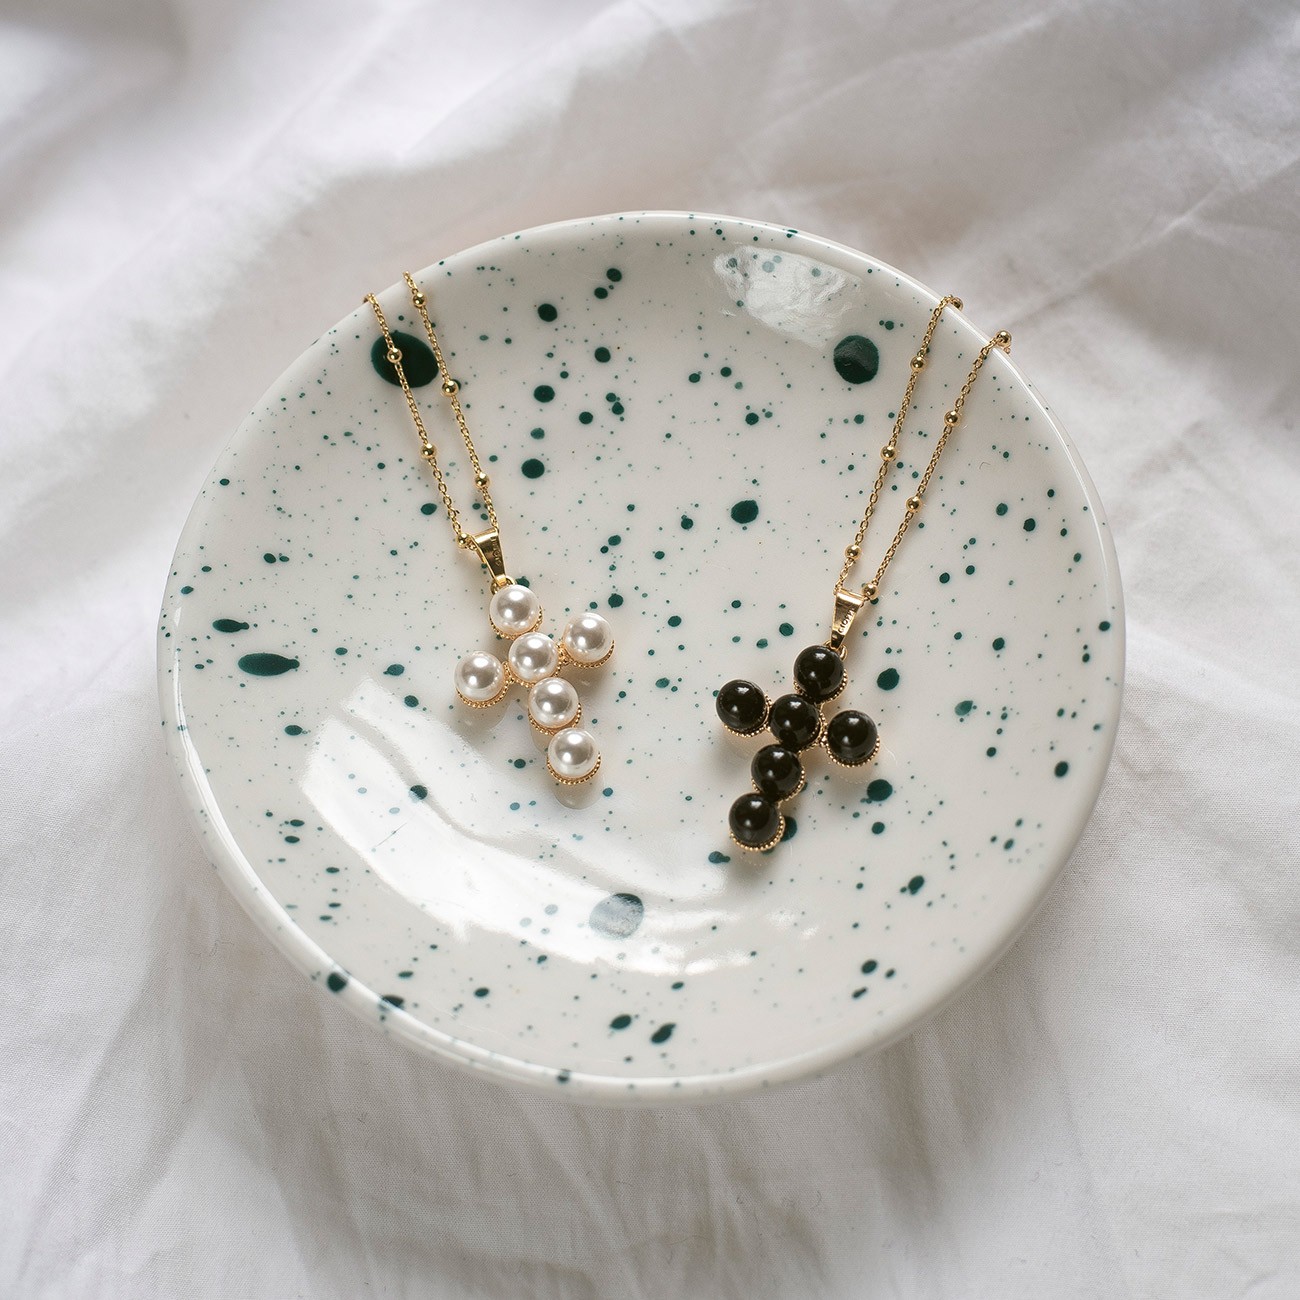 Cross necklace with swarovski pearls, silver 925 & swarovski